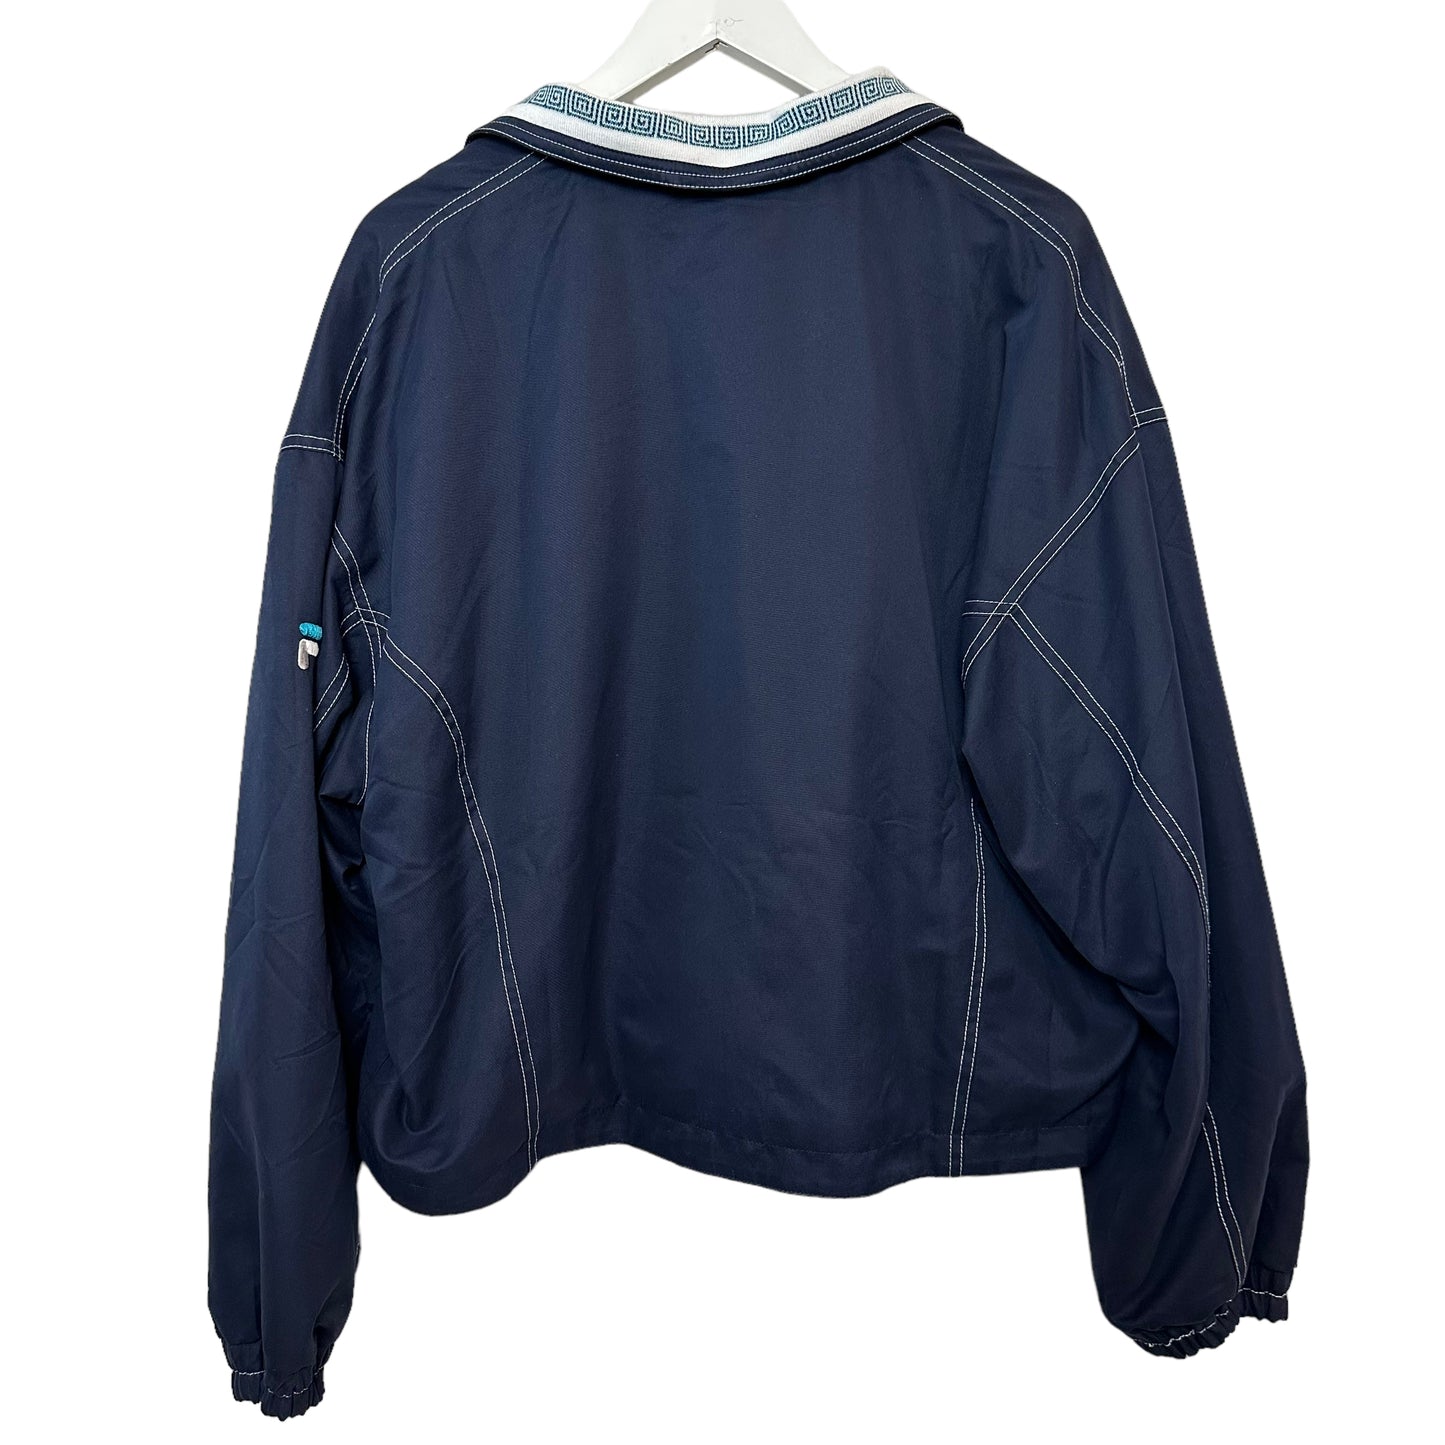 Vintage 90s Fila Jacket Zip Up Wind Breaker Cropped Boxy Navy Blue Collared XL